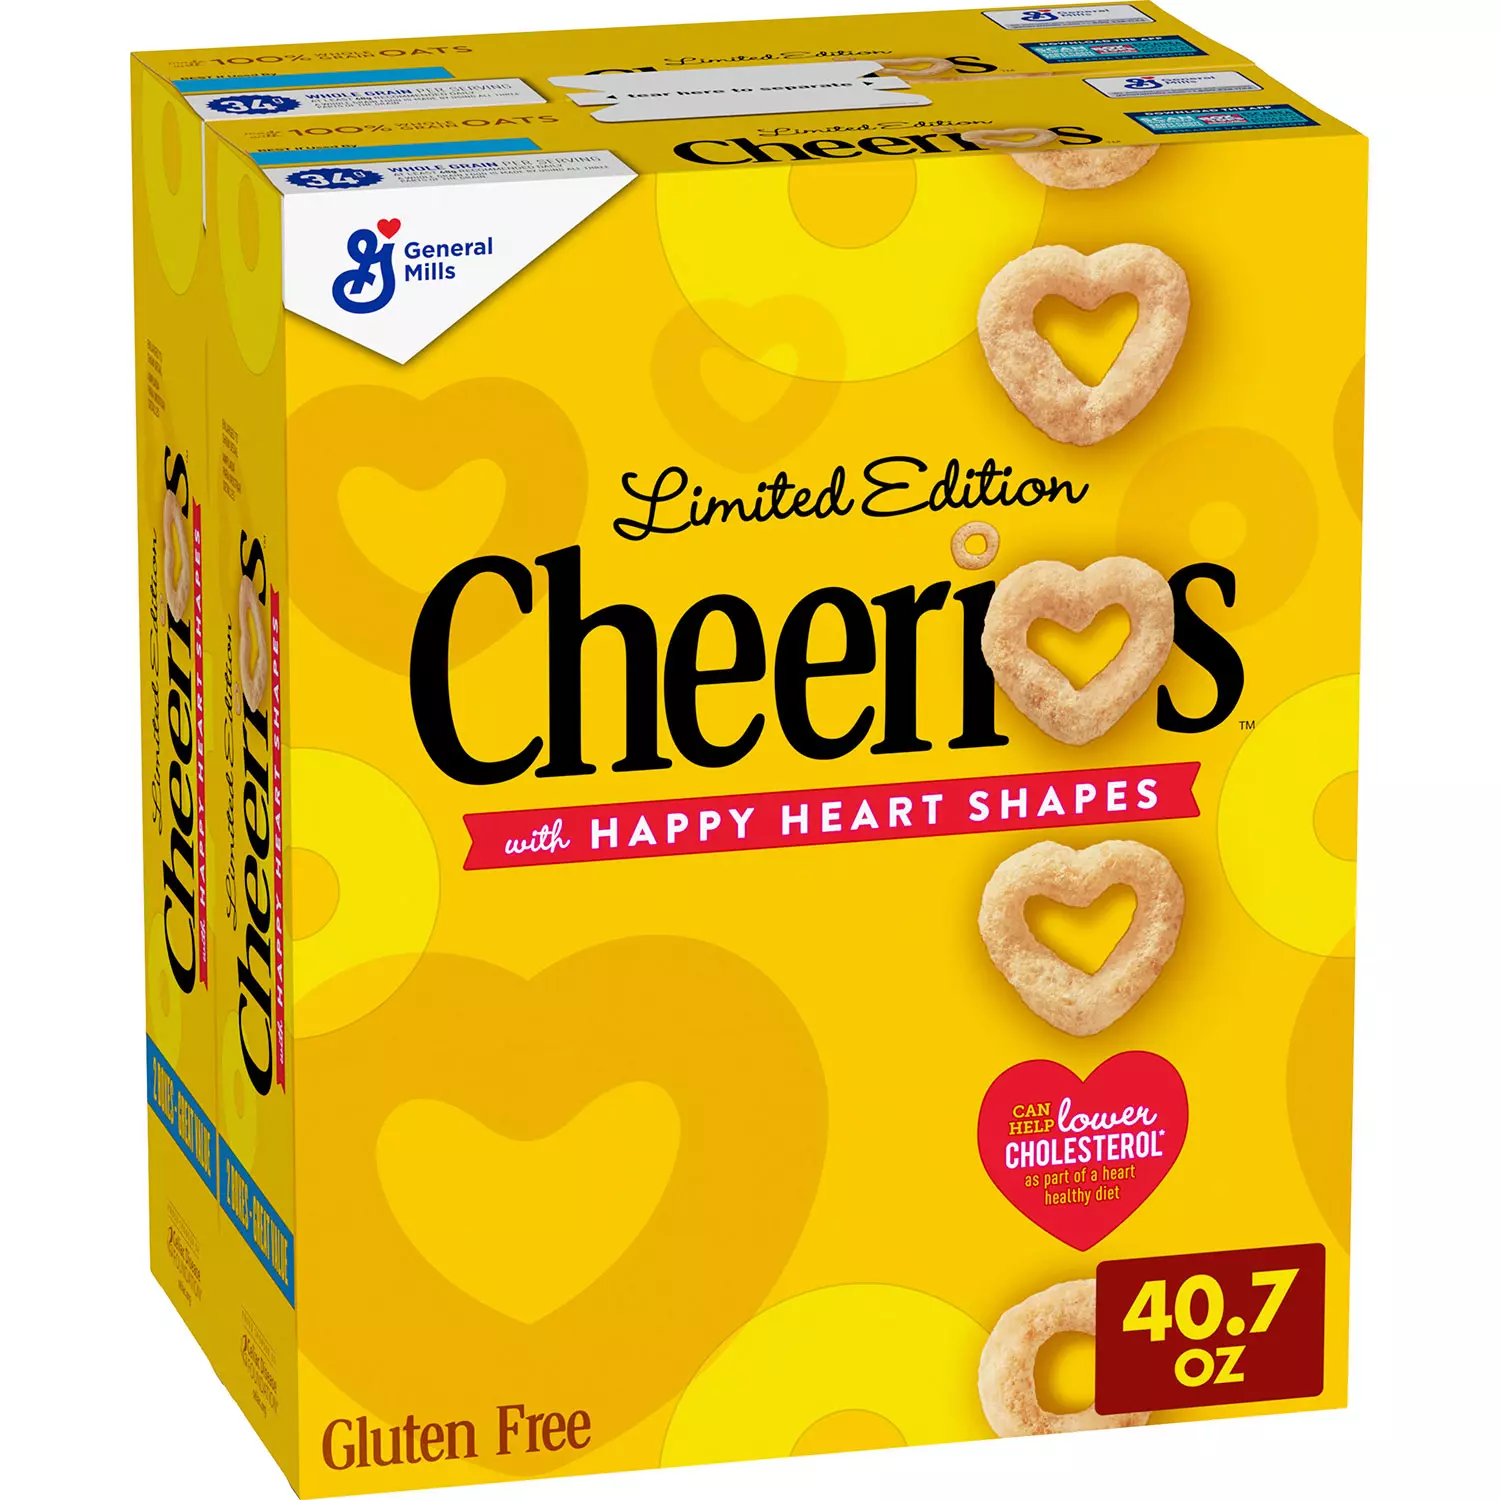 Cheerios Gluten-Free Breakfast Cereal (2 pk.)